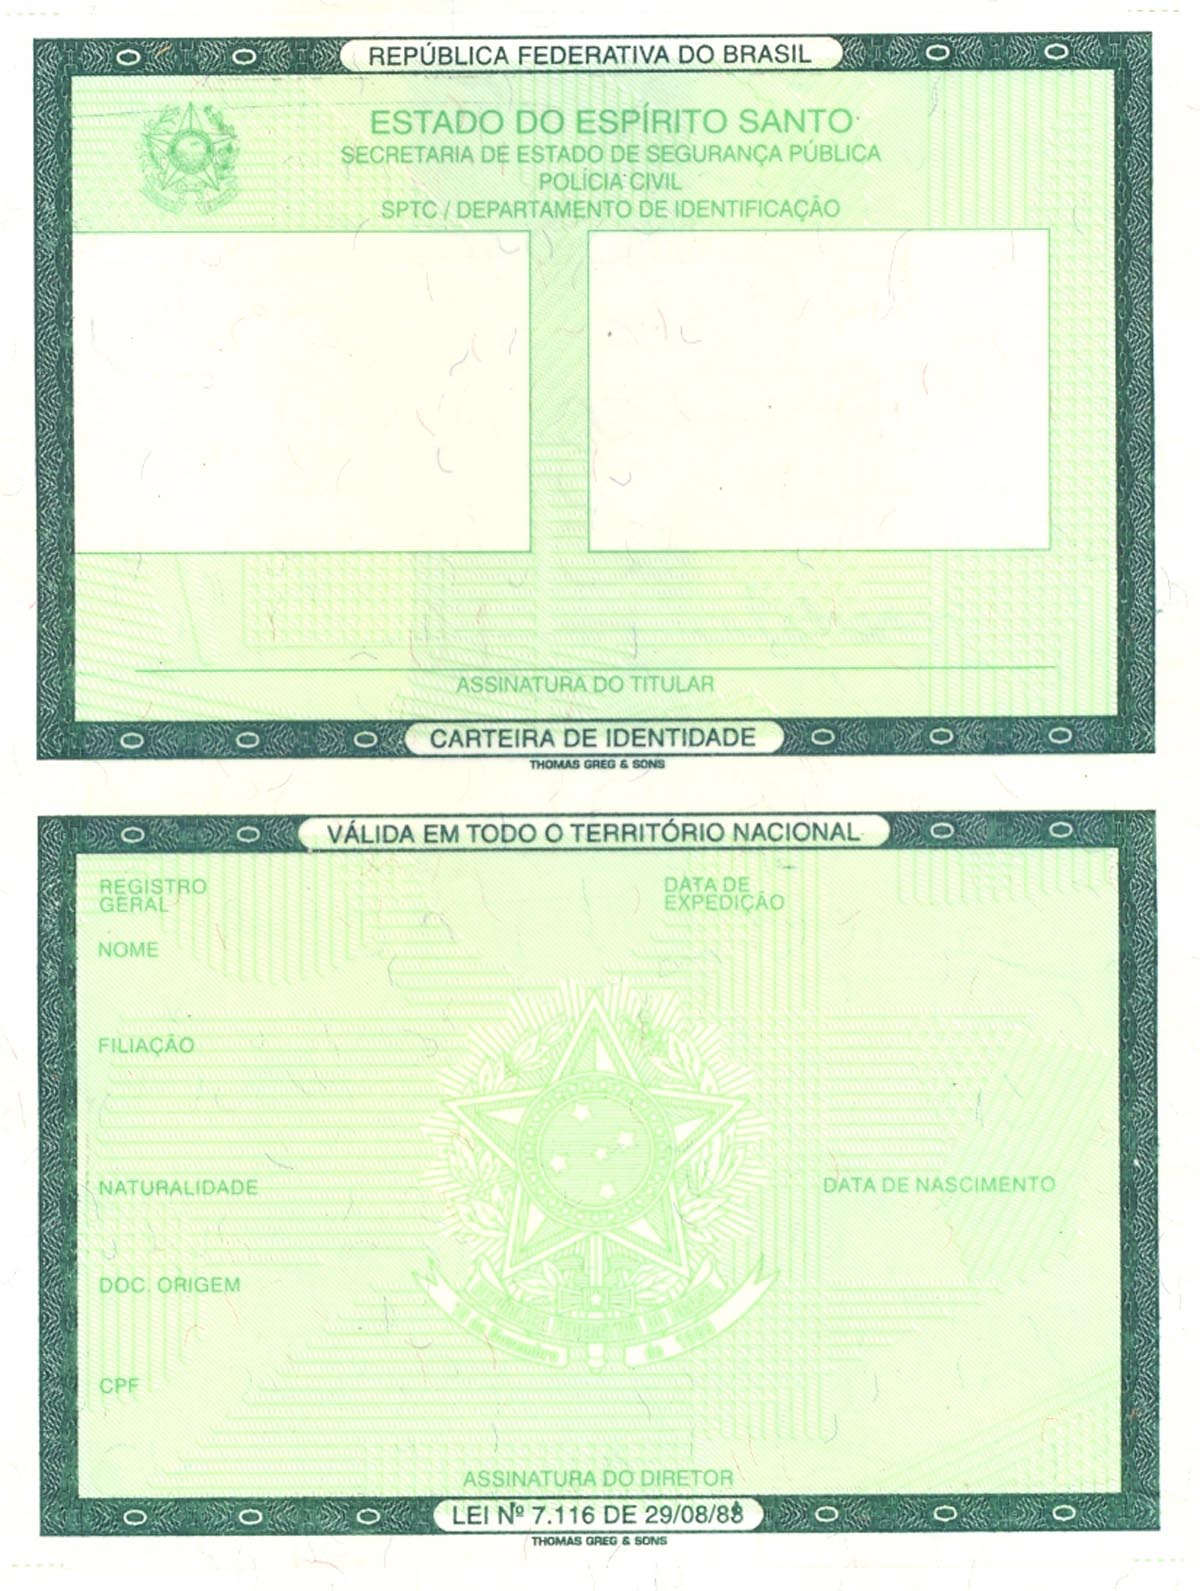 national identity document china expired use on application